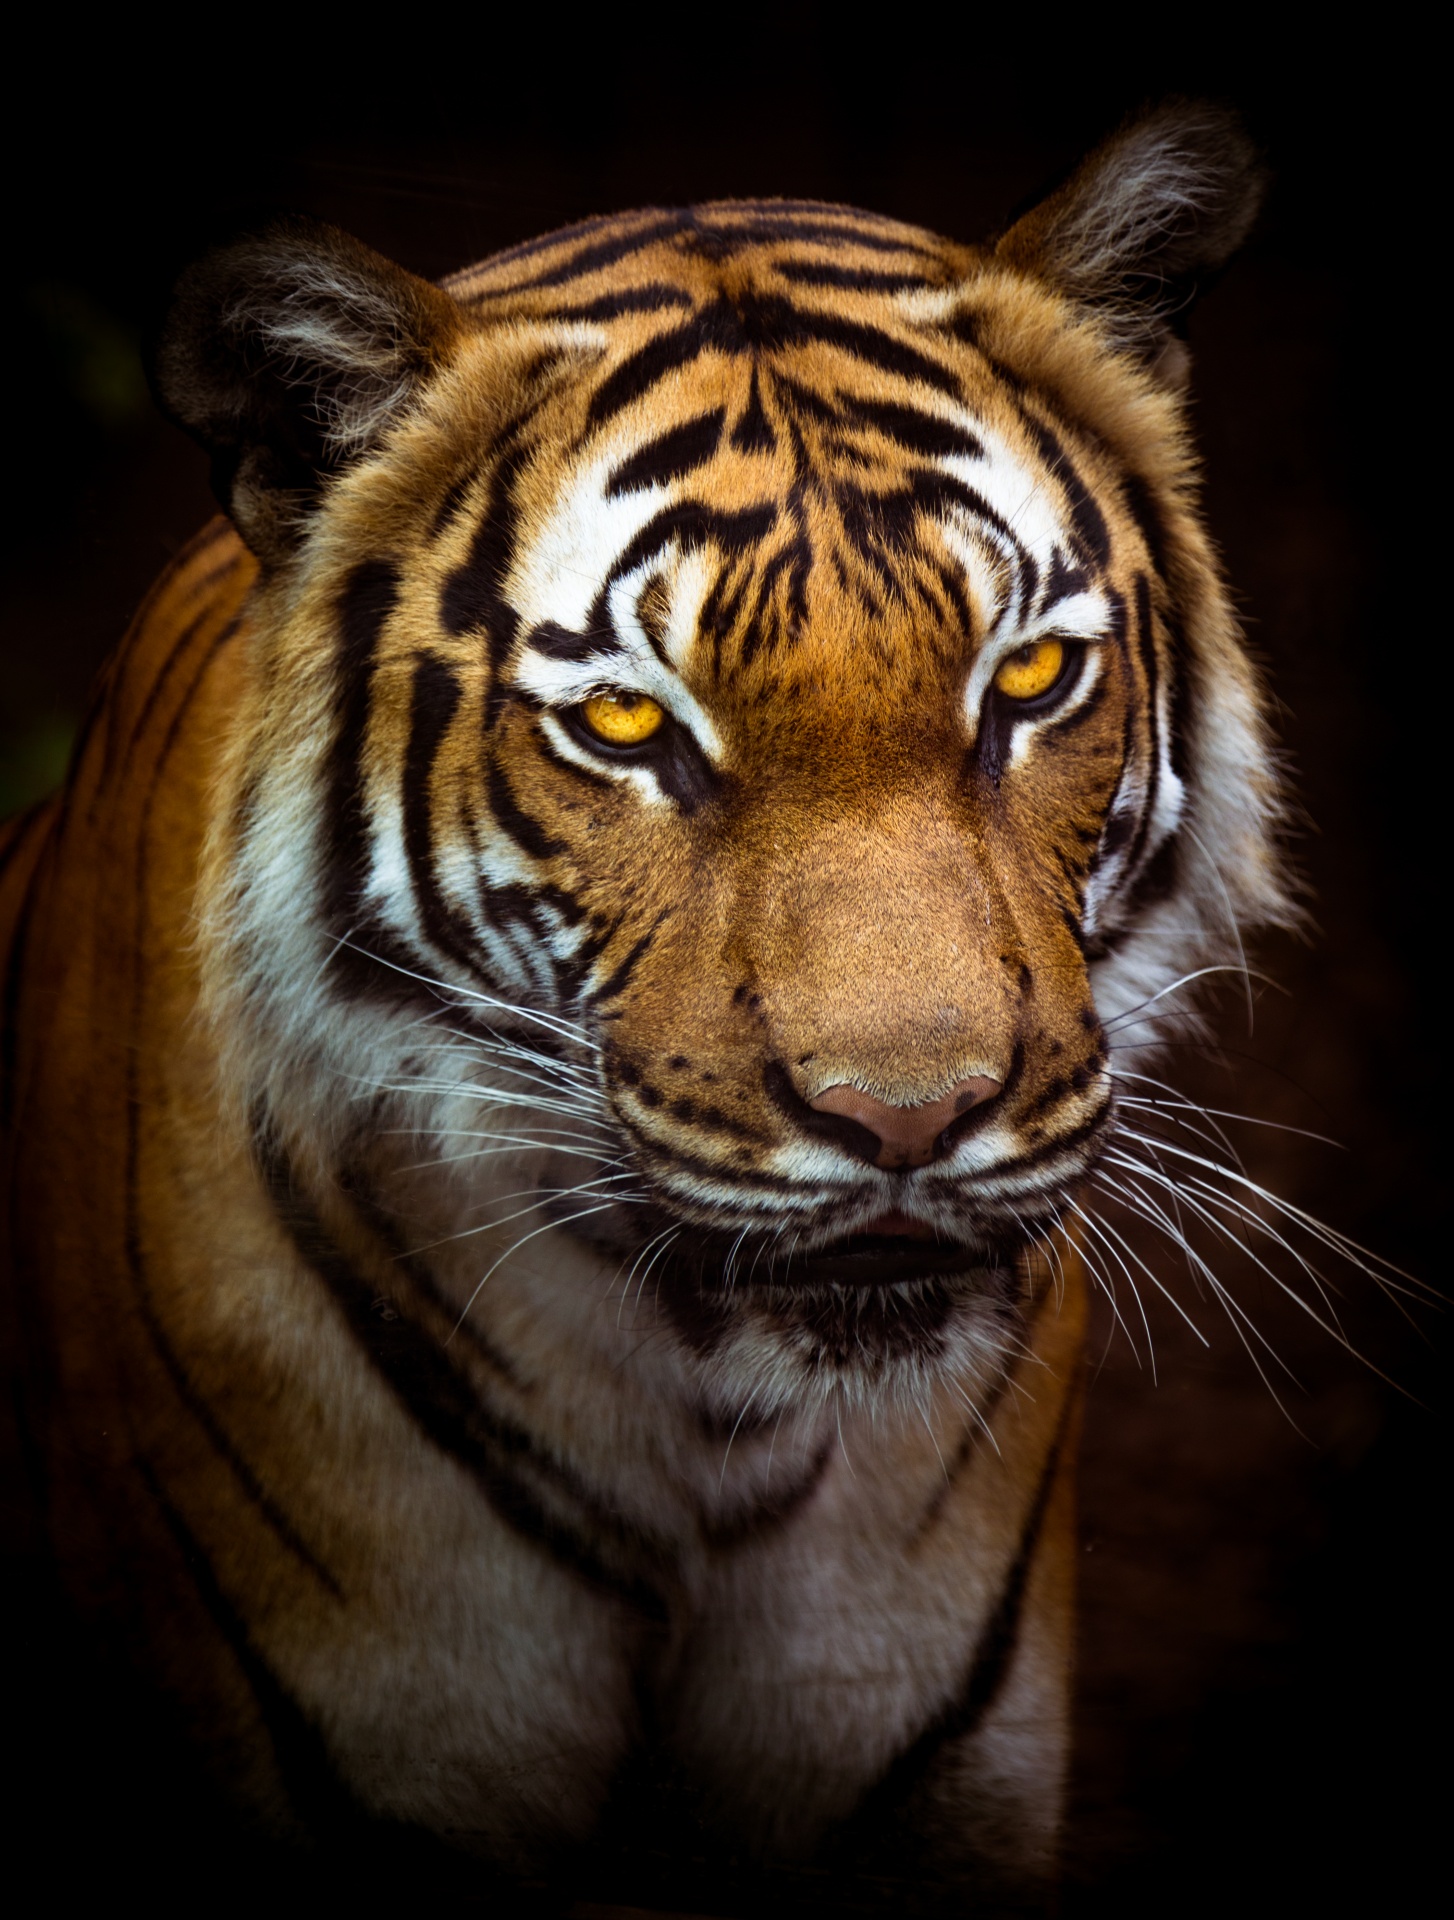 Dramatic tiger portrait on dark background